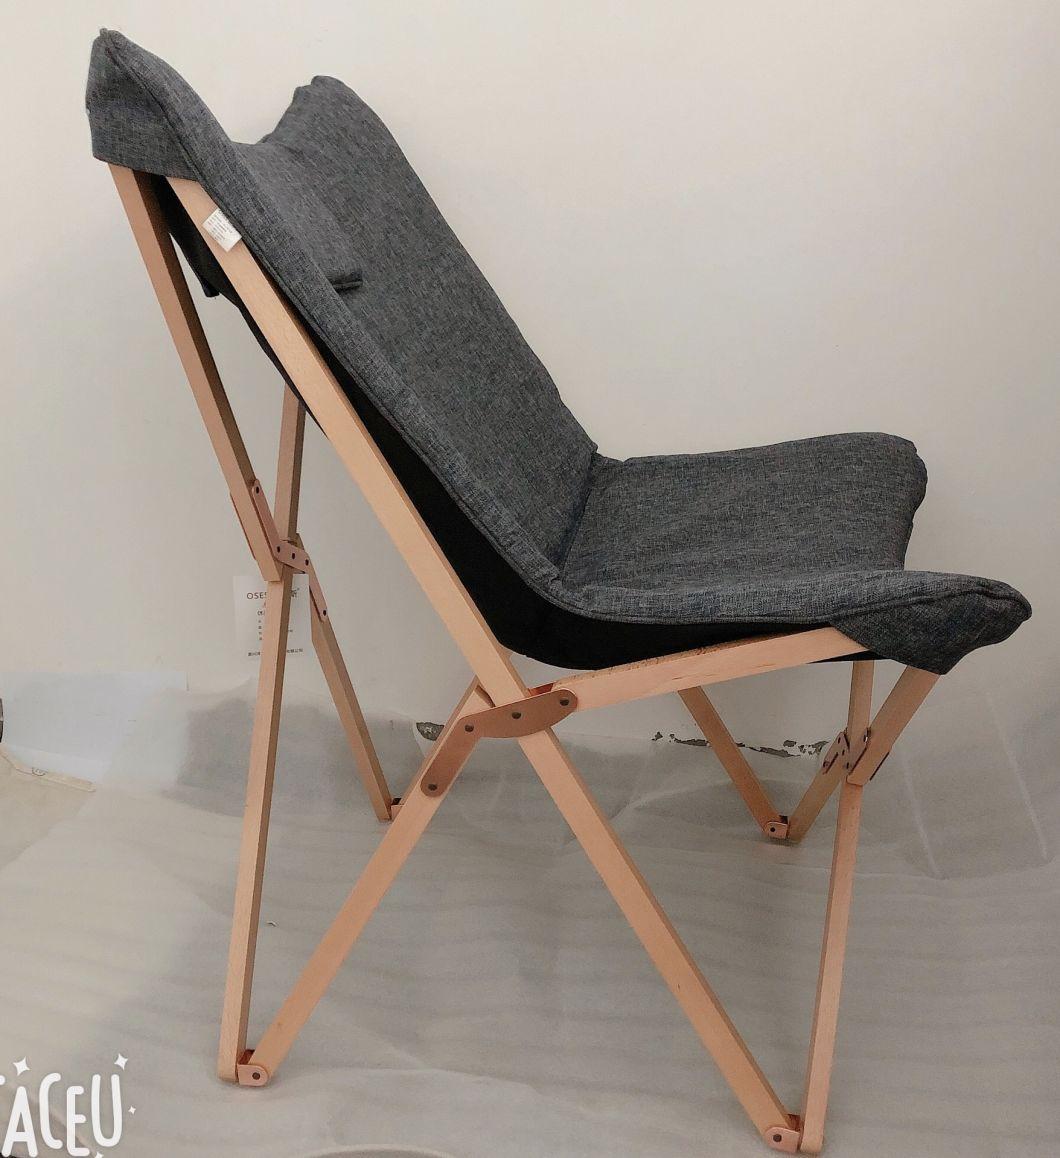 Portable Wood Beach Chair Butterfly Chair Anti-Tear Fabric Folding Outdoor Camping Chair